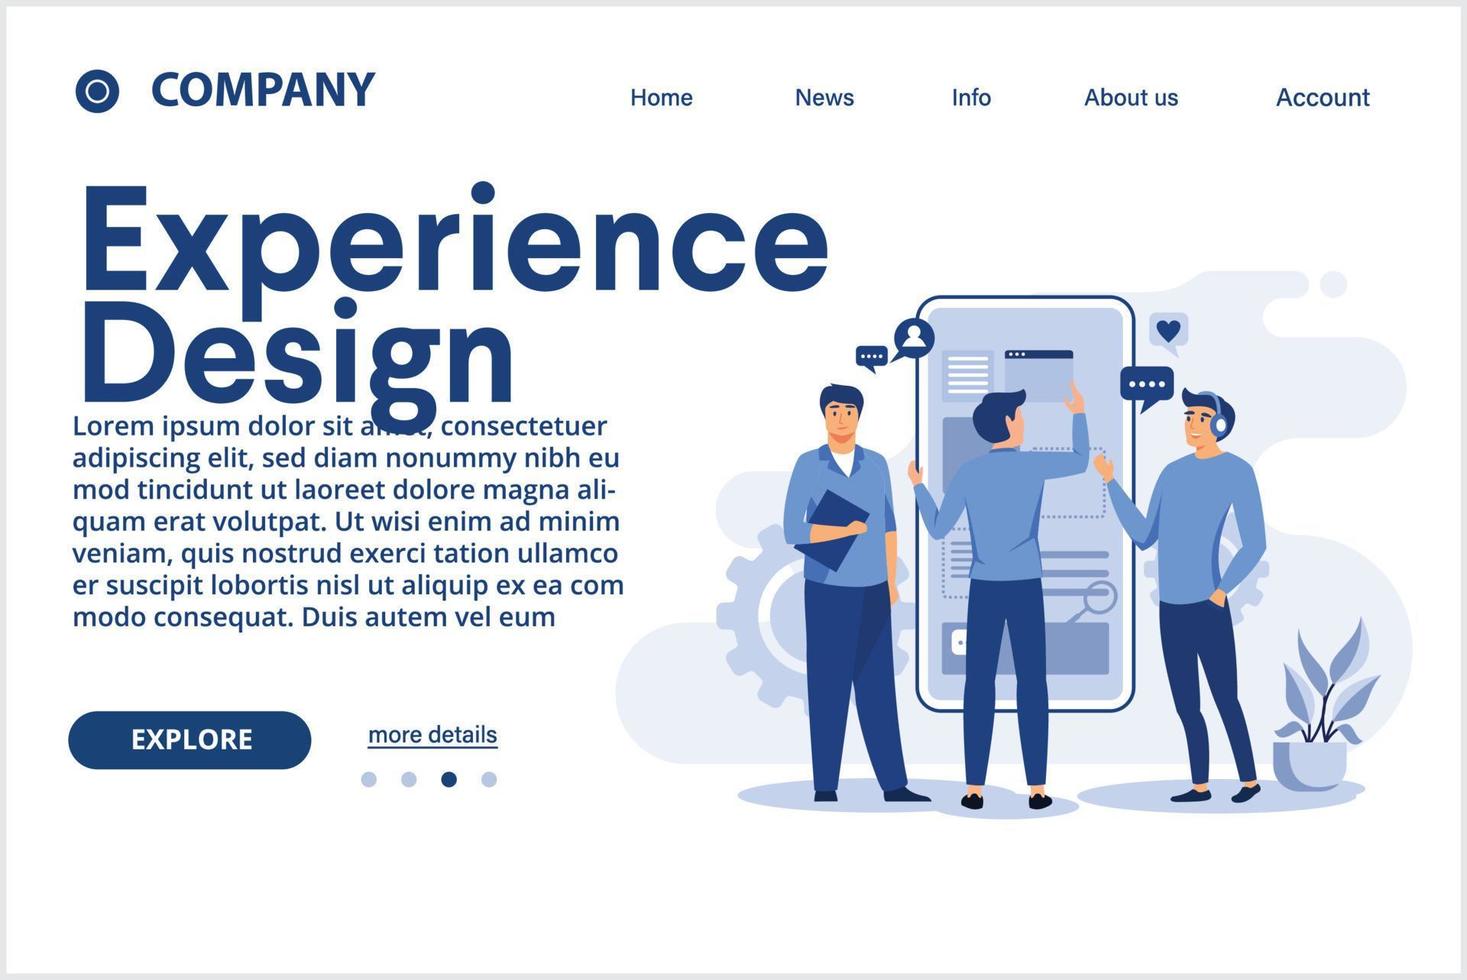 design de experiência web design, interface do usuário ui e experiência do usuário ux organização de conteúdo. conceito de desenvolvimento de web design. ilustração em vetor conceito isolado.